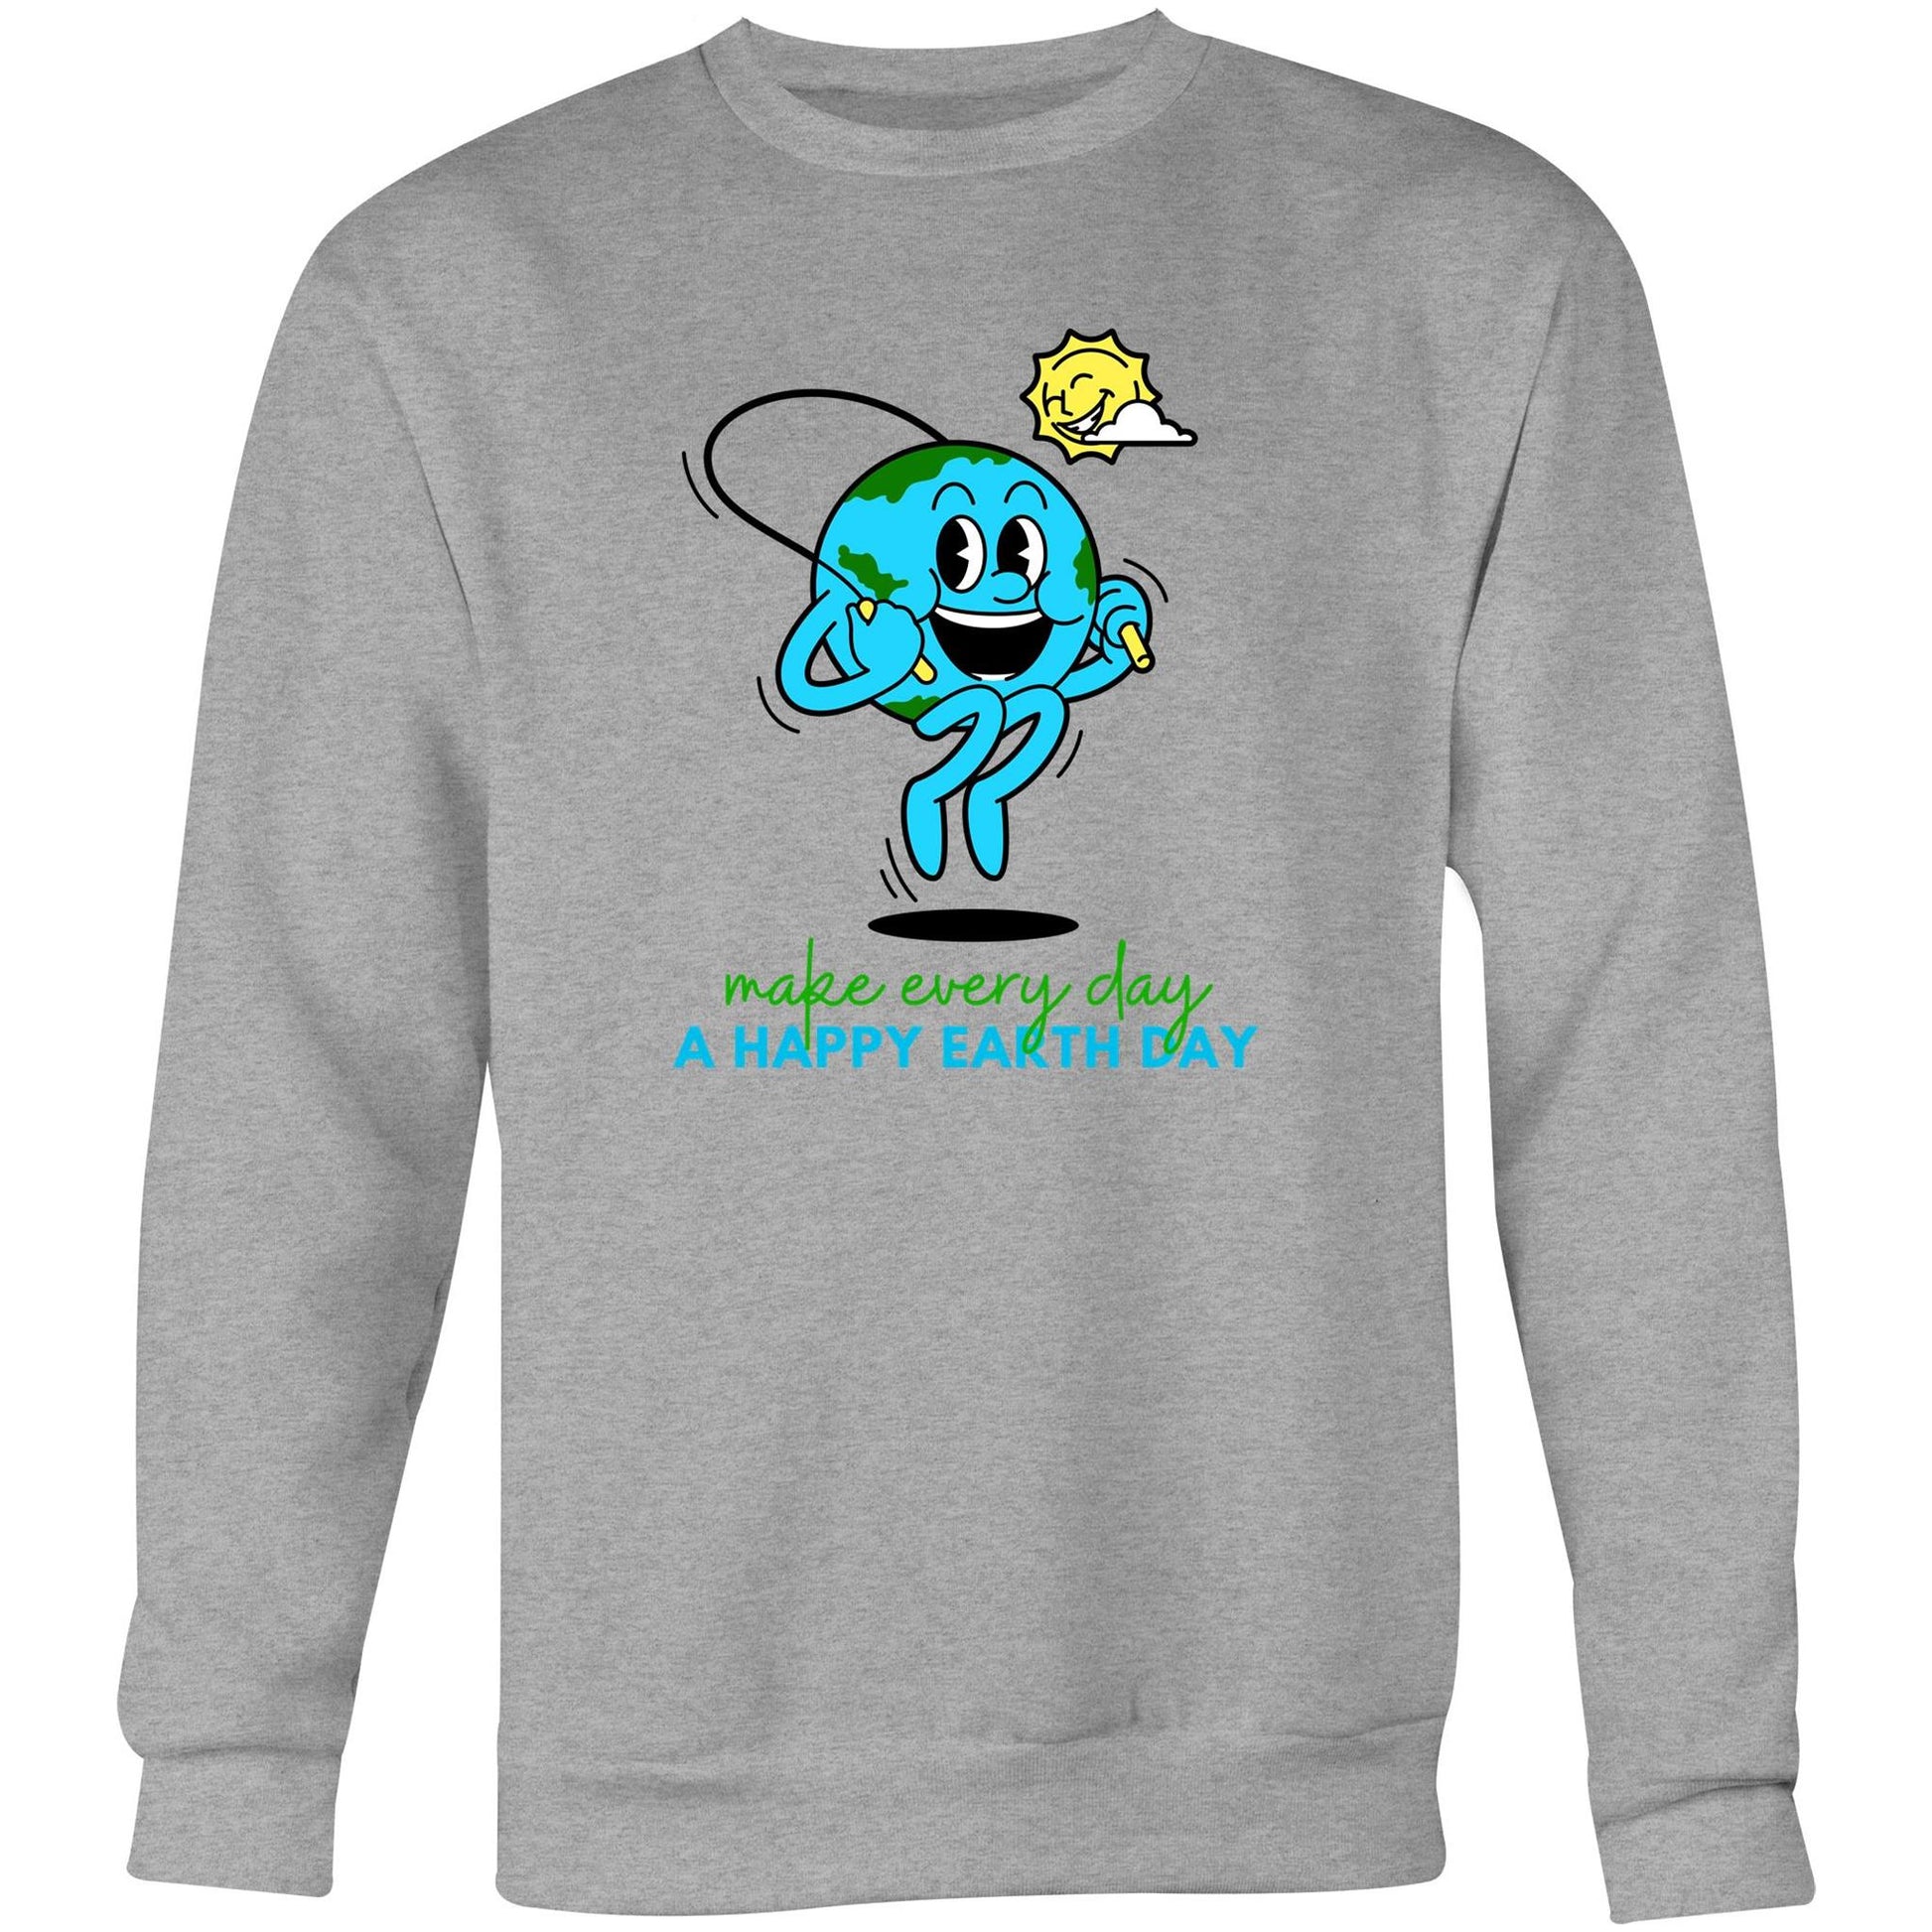 Make Every Day A Happy Earth Day - Crew Sweatshirt Grey Marle Sweatshirt Environment